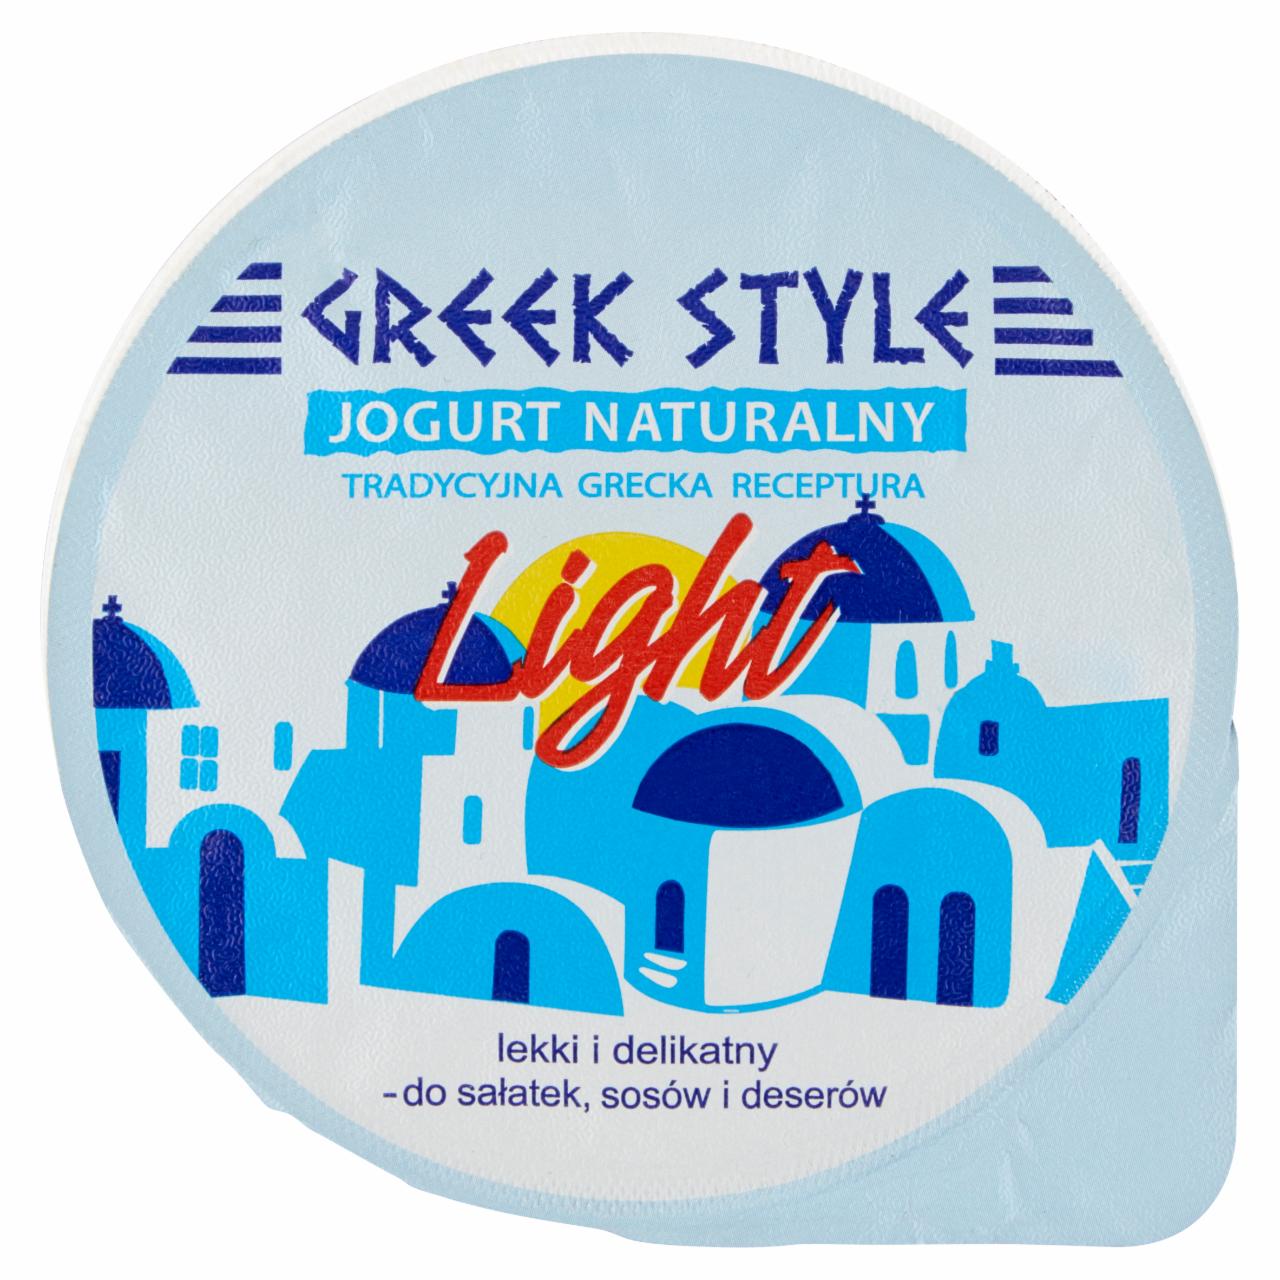 Zdjęcia - Greek Style Light Naturalny jogurt delikatny 180 g